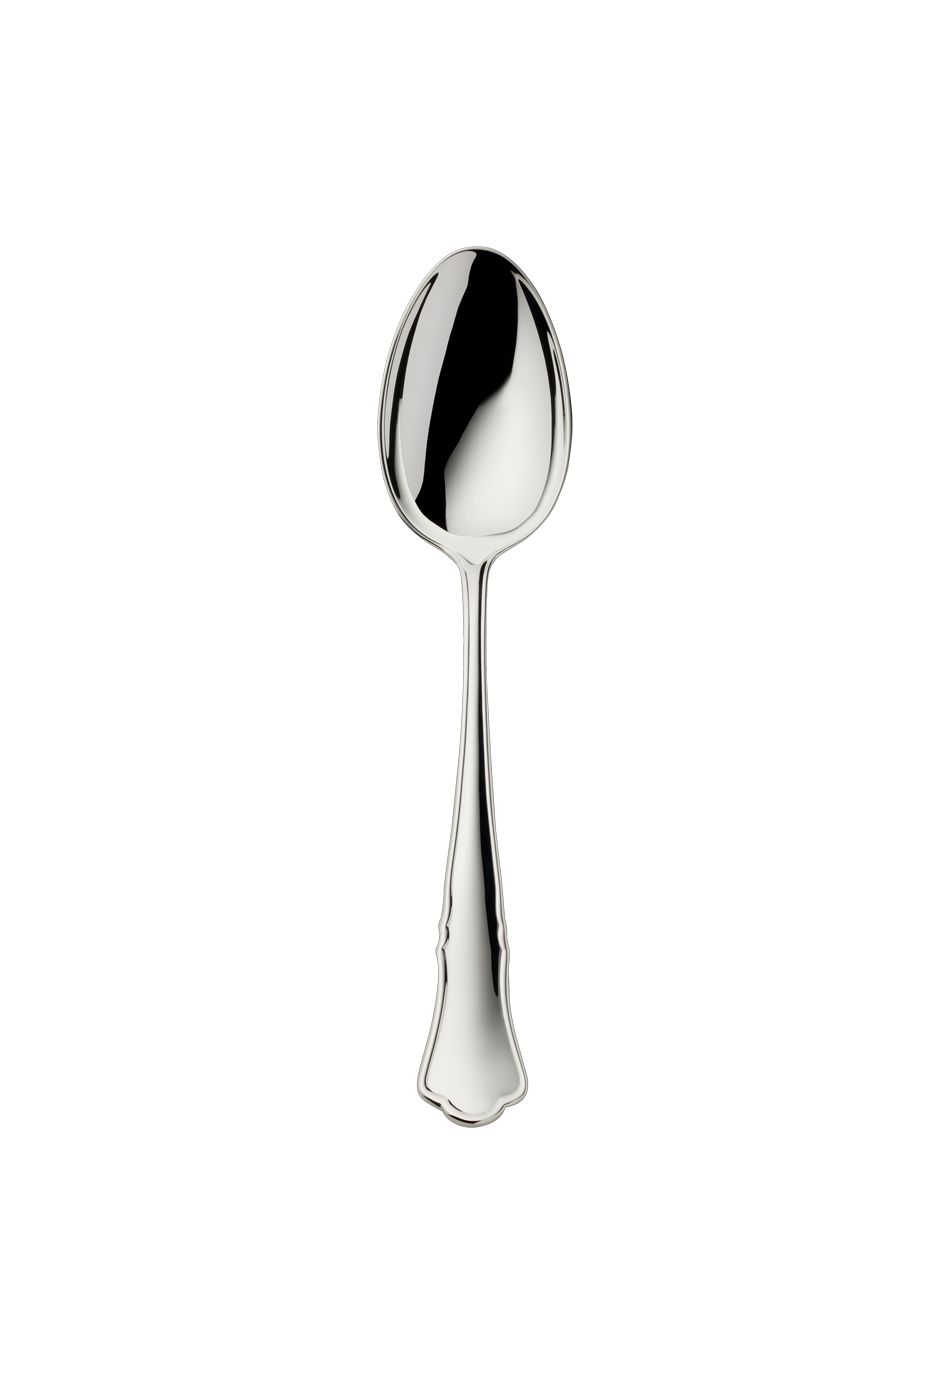 Alt-Chippendale Dessert Spoon (150g massive silverplated)